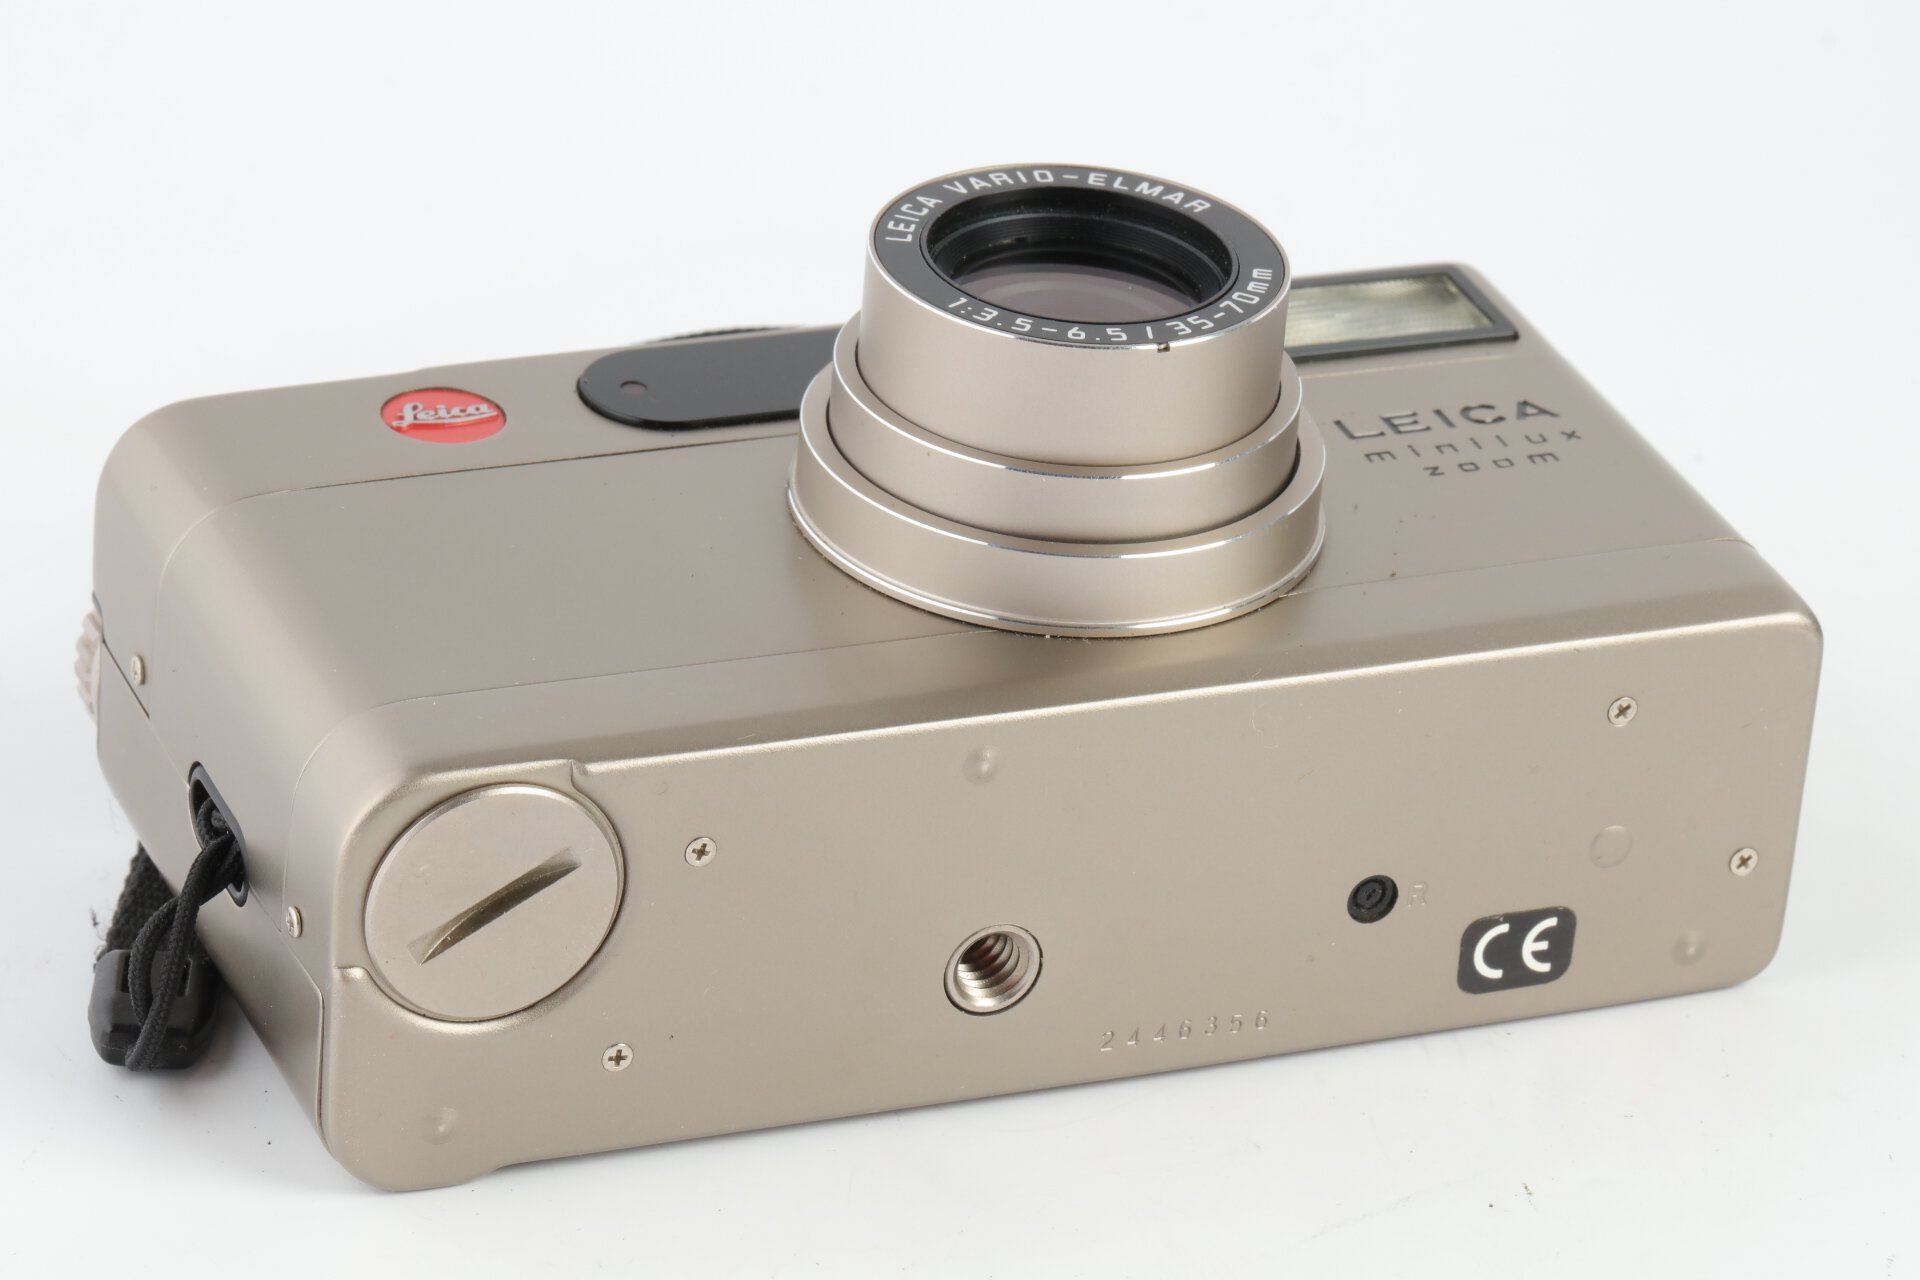 Leica Minilux Zoom 3,5-6,5/35-70mm Vario-Elmar